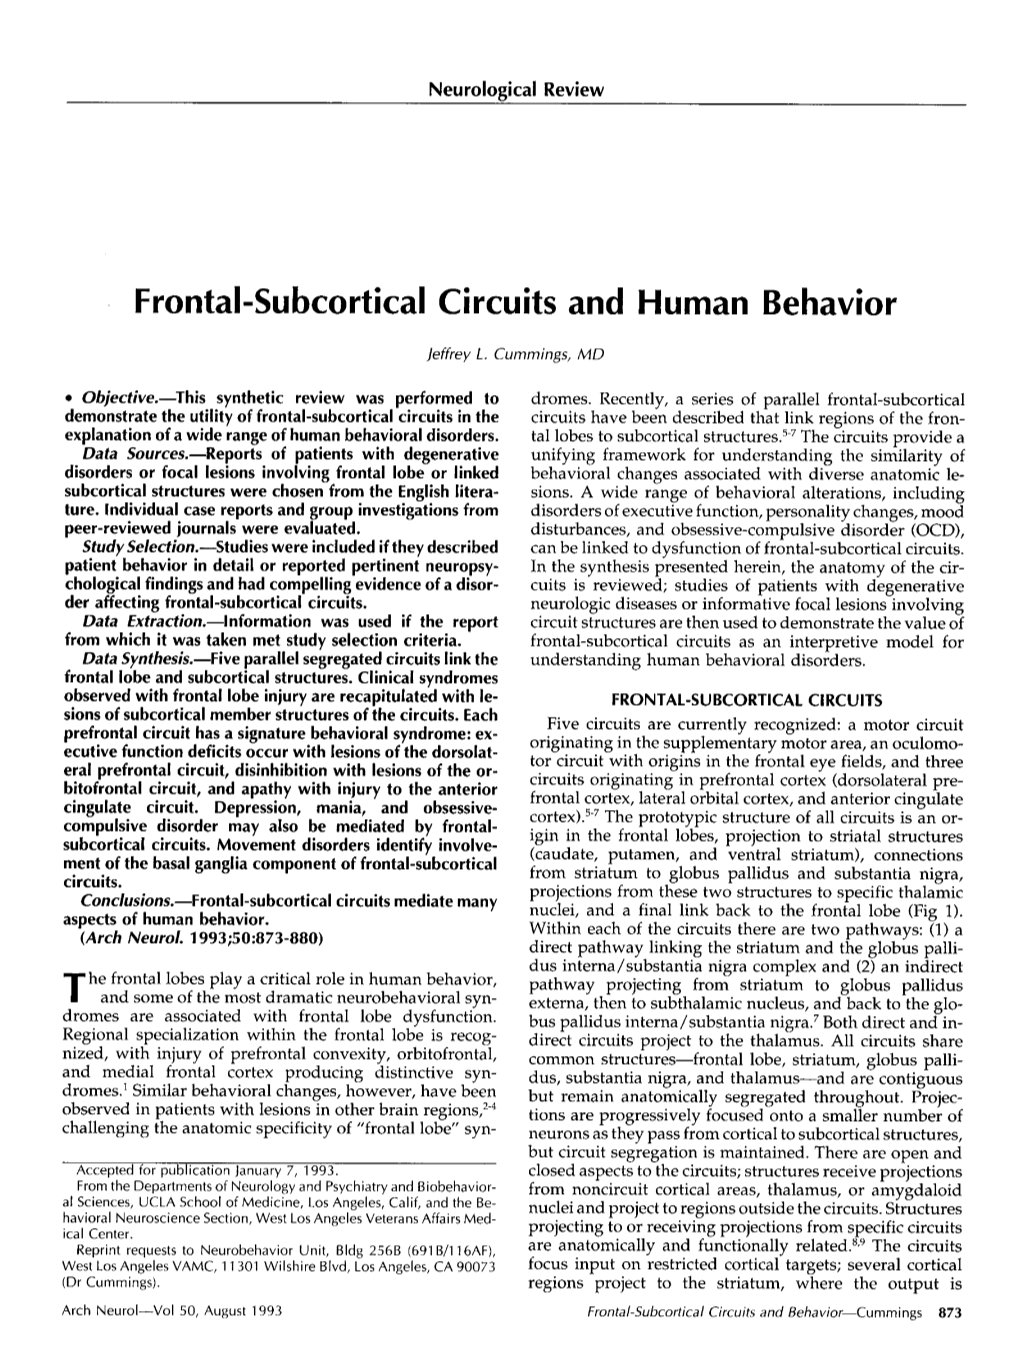 Frontal-Subcortical Circuits and Human Behavior